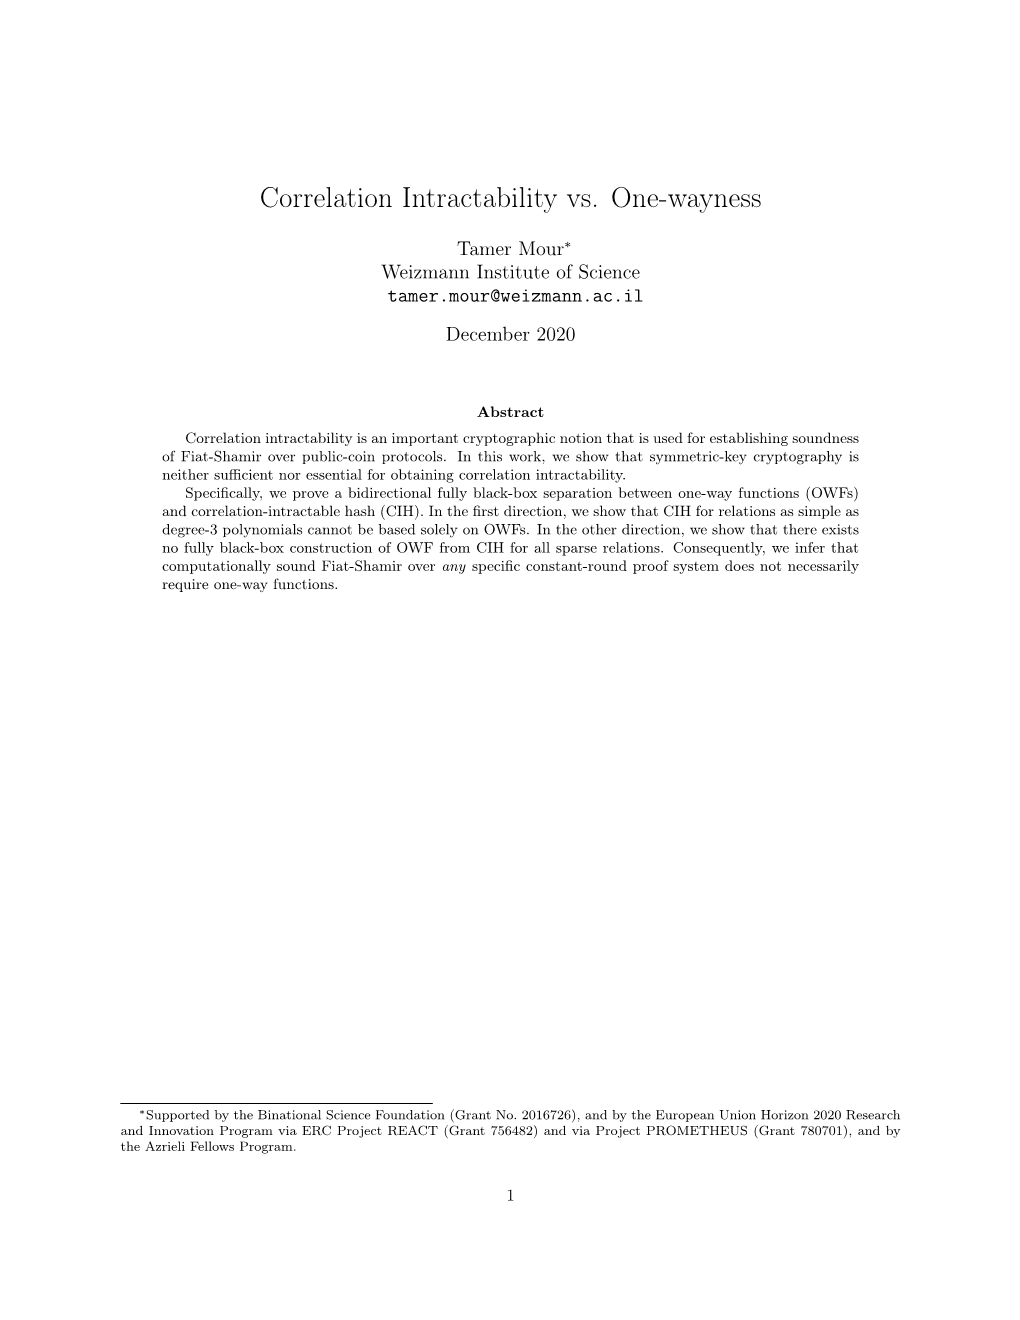 Correlation Intractability Vs. One-Wayness